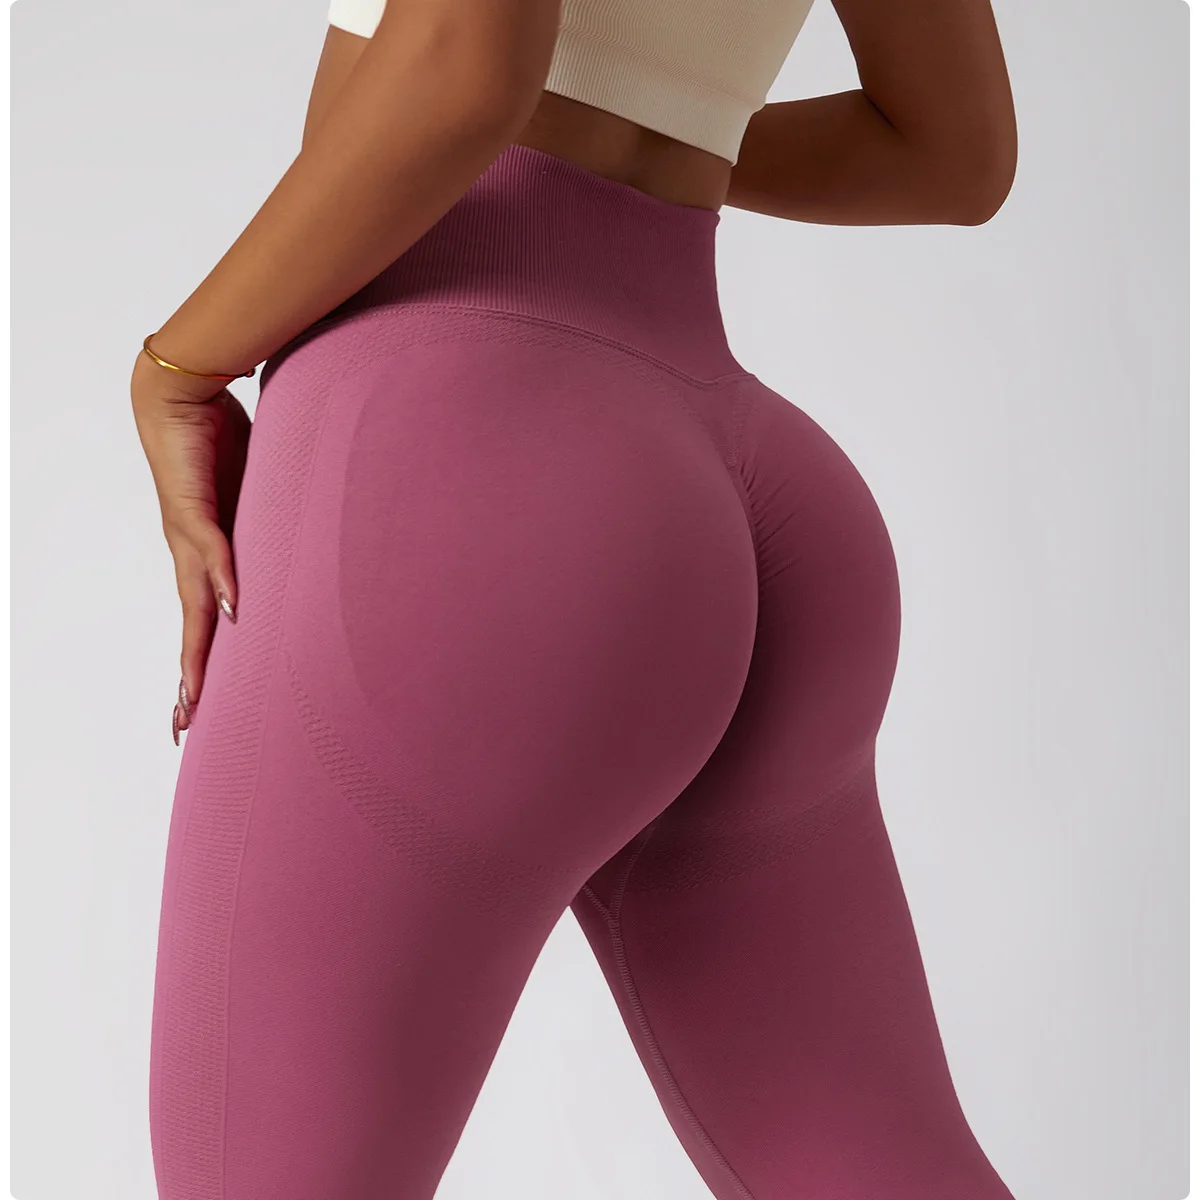 Leggings Women Butt Lifting Workout Tights Plus Size Sports High Waist Yoga Pants  Large 